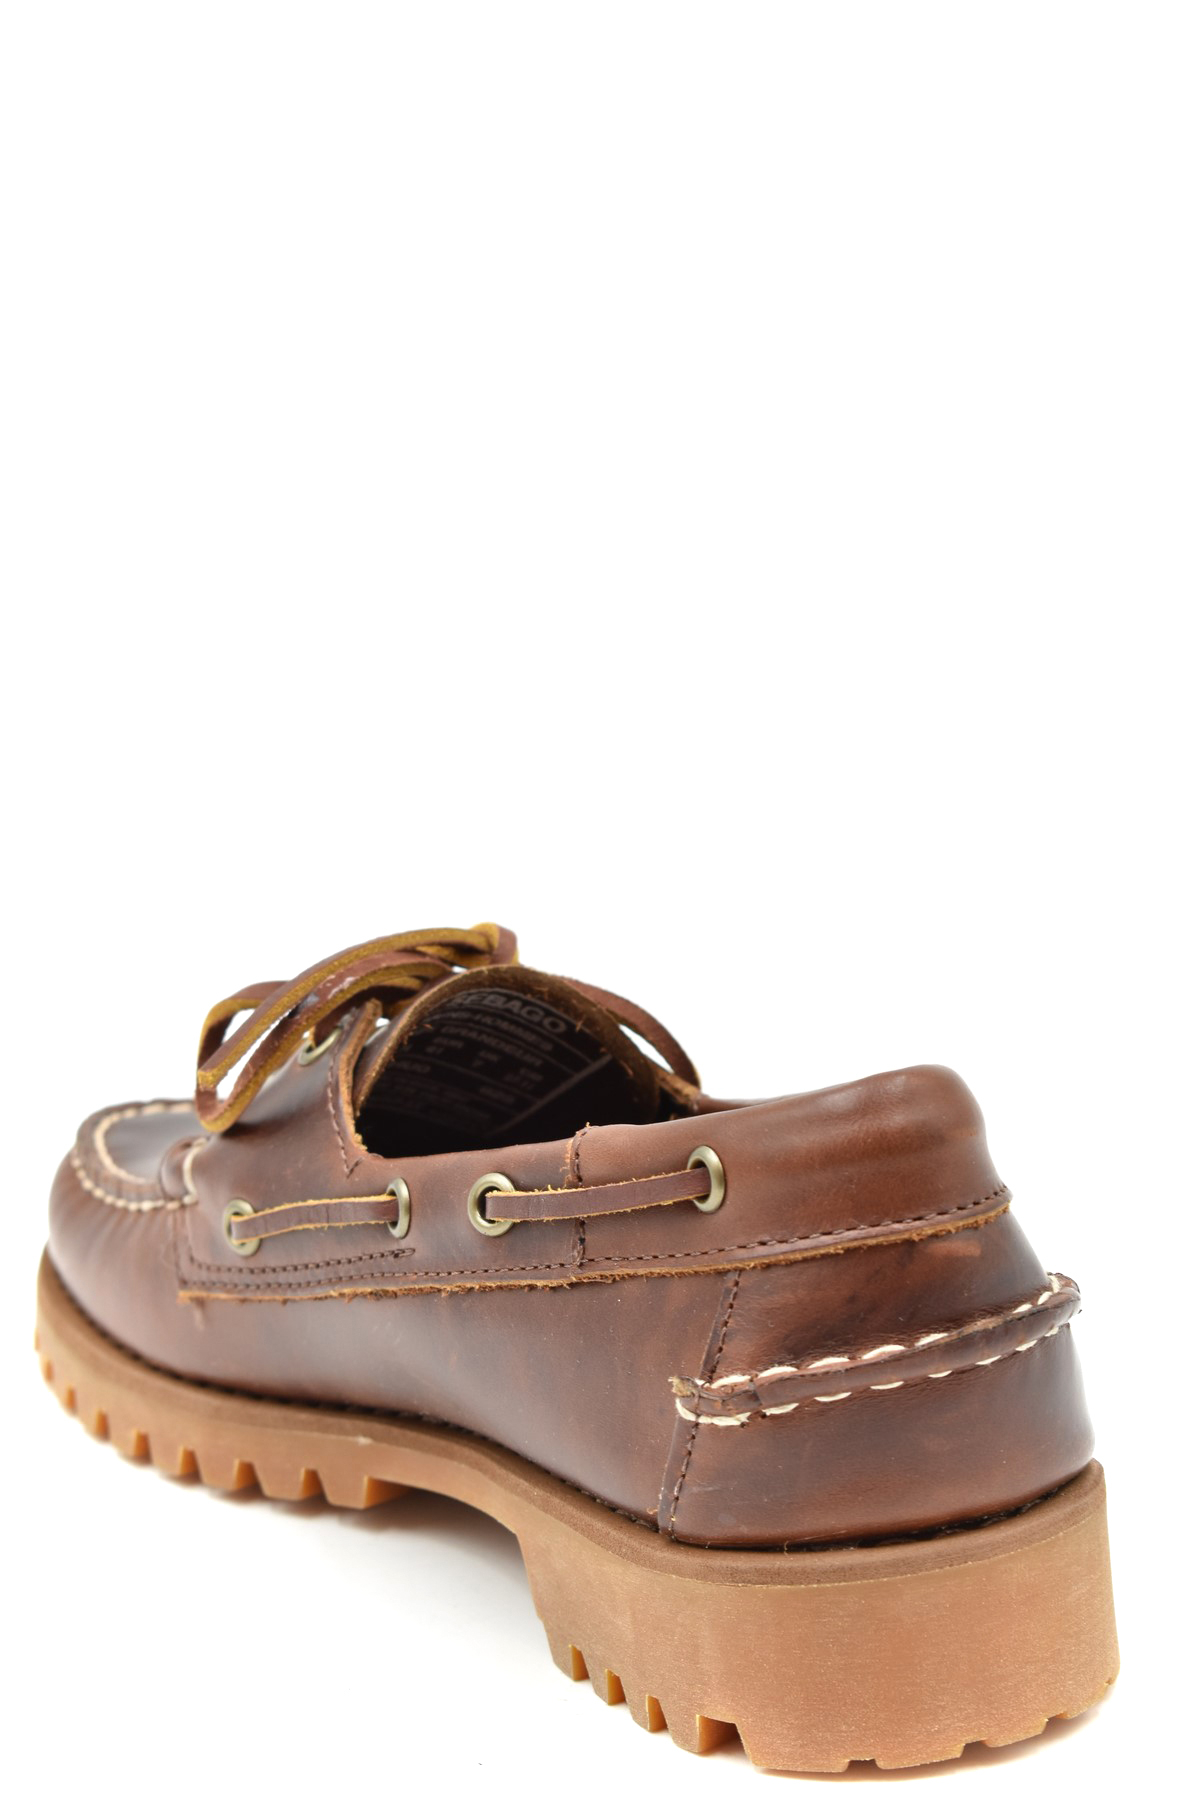 SEBAGO CAMPSIDES Men's Shoes Loafer Brick Leather NIB Authentic 7 UK 8 ...